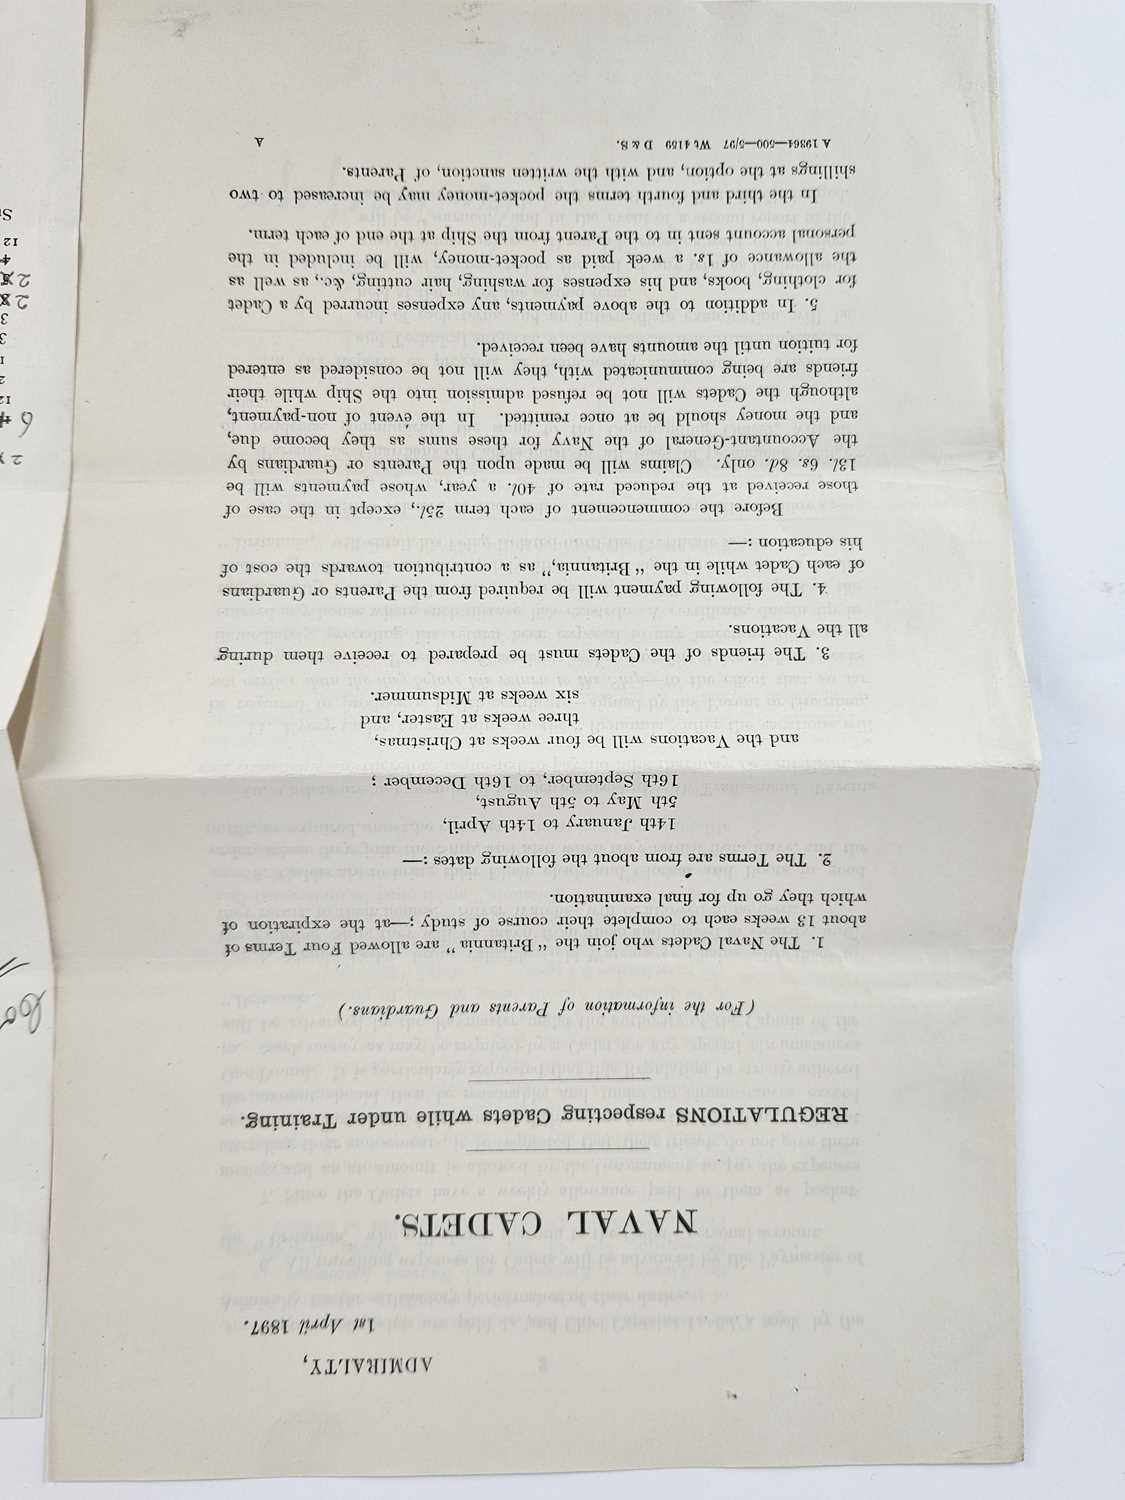 Royal Navy interest documents. - Image 10 of 14